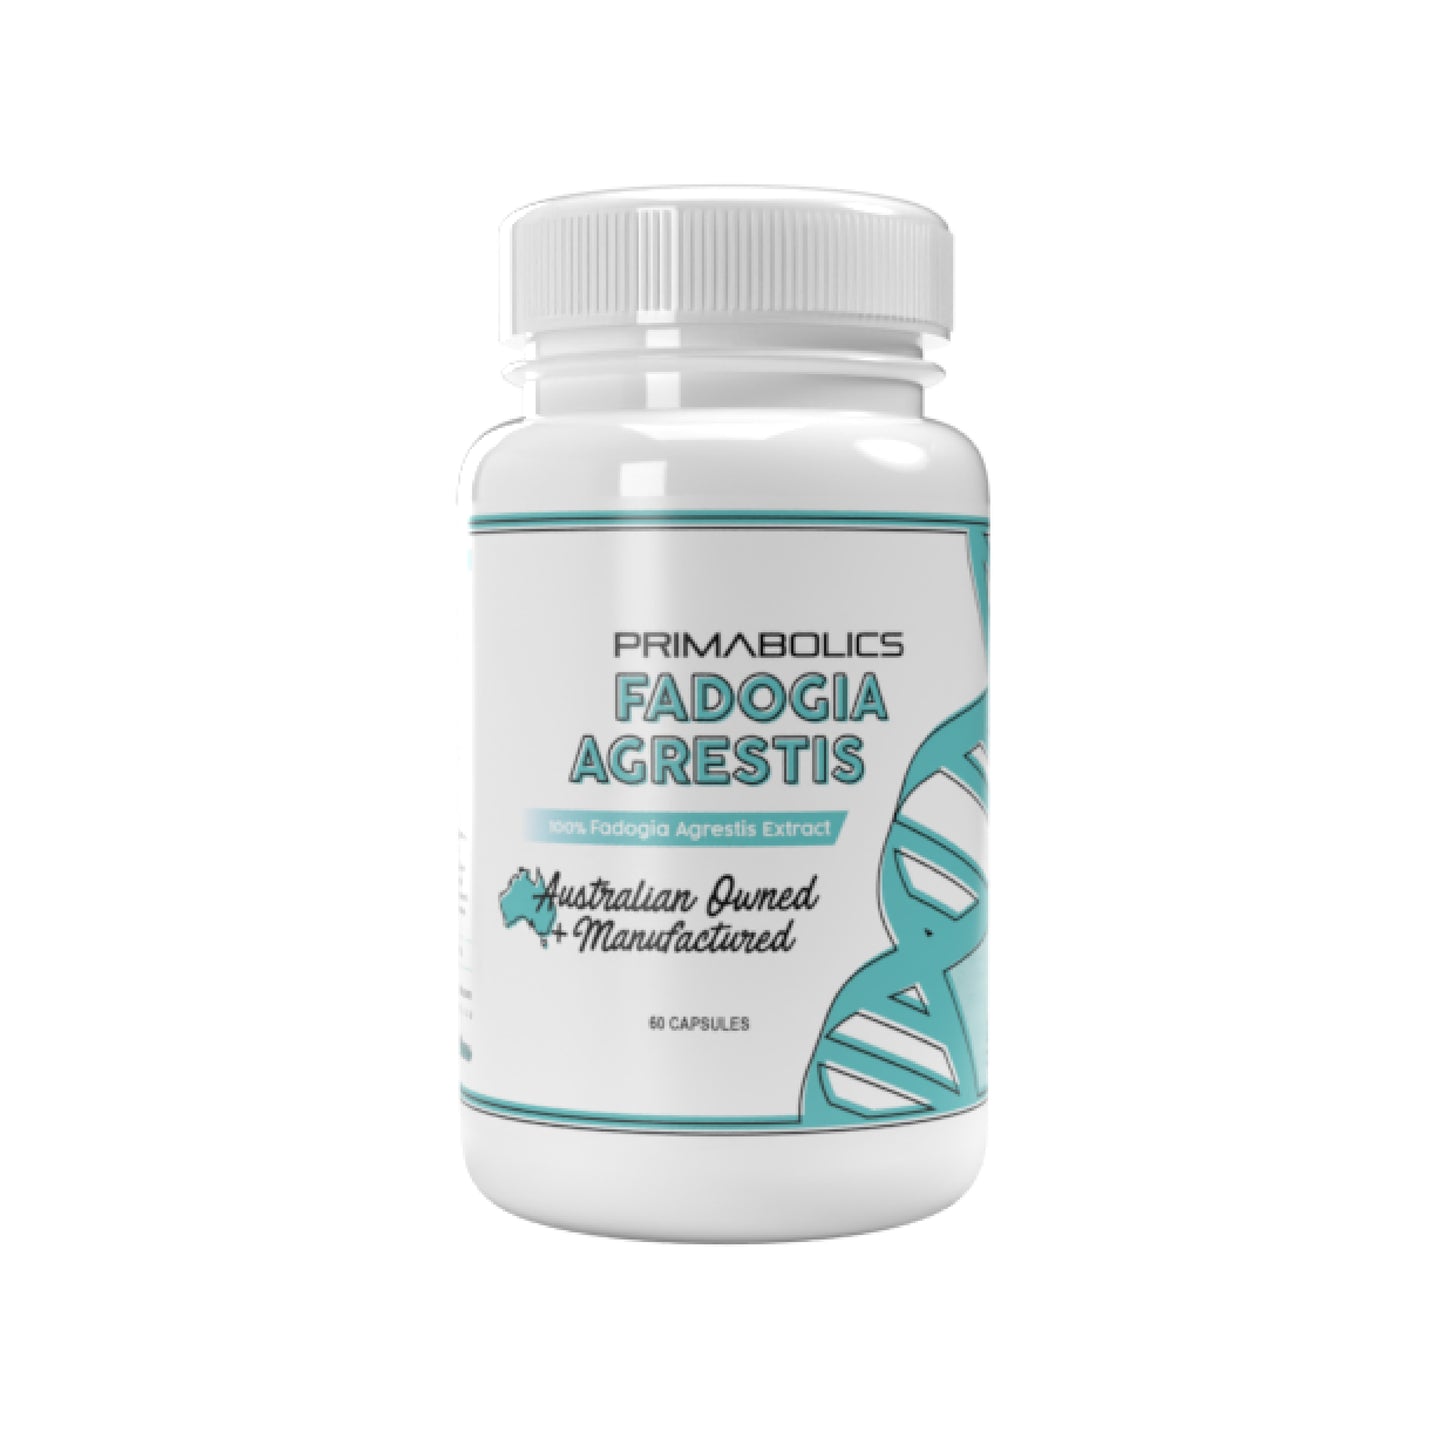 Fadogia Agrestis Extract